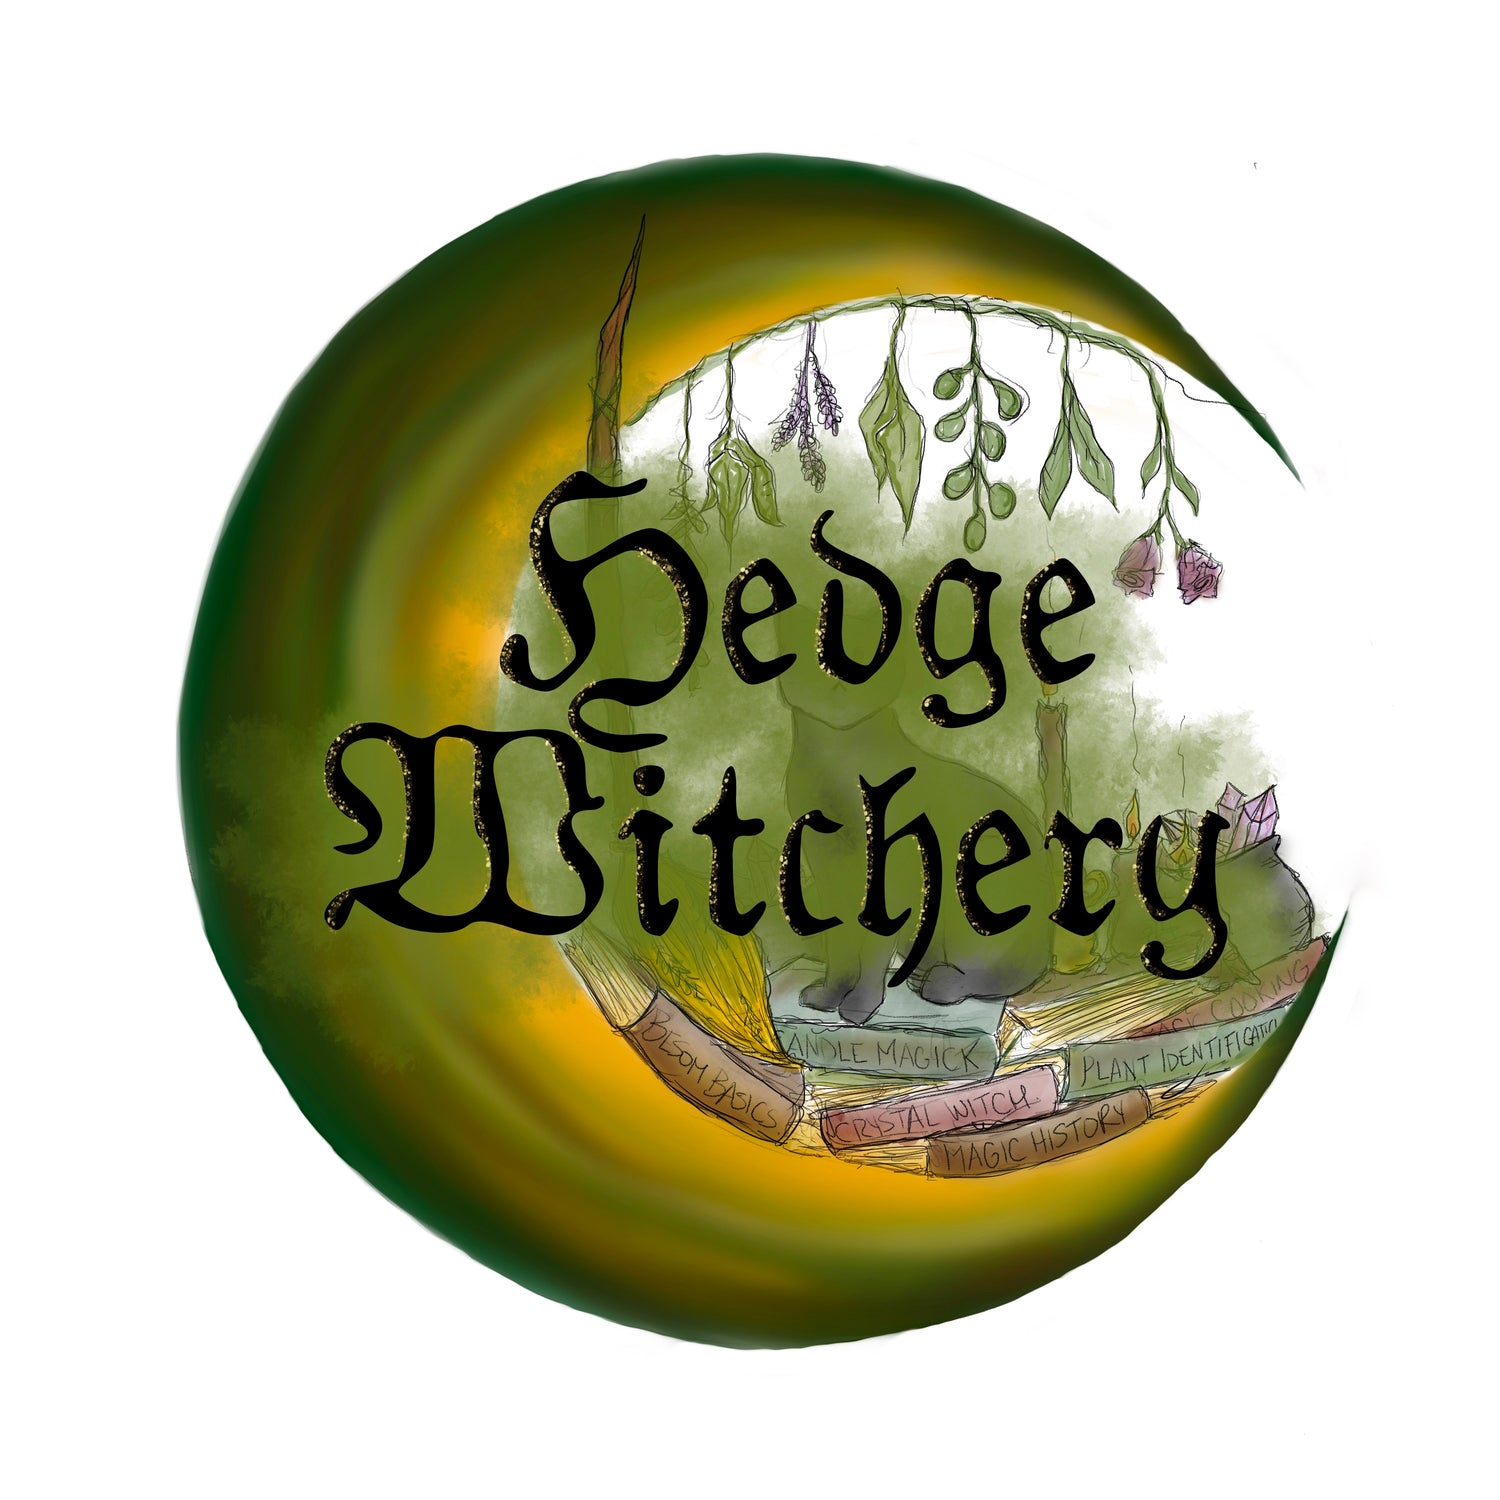 Hedge Witchery